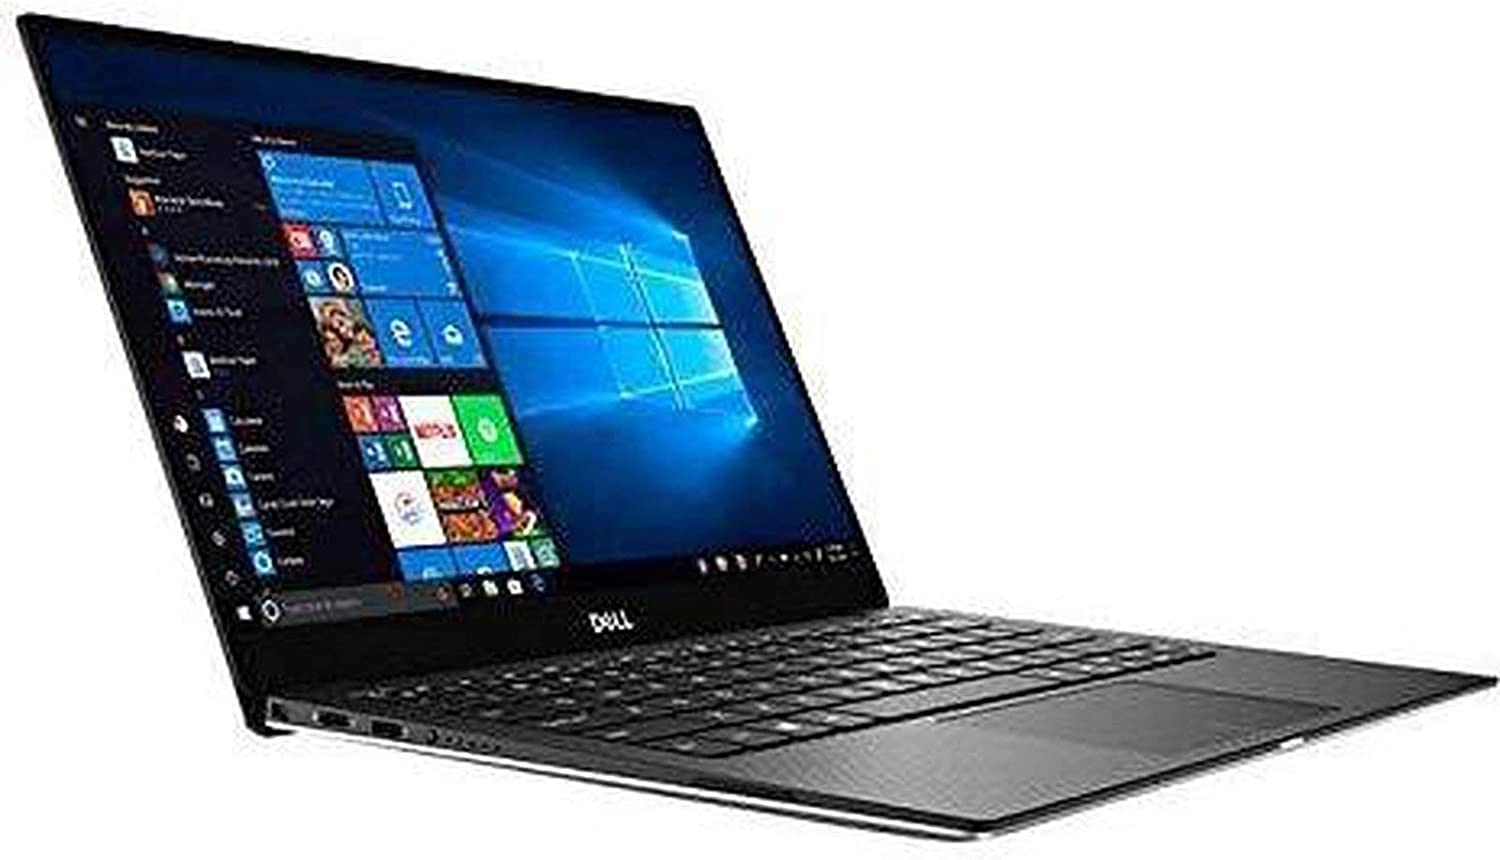 Dell XPS13 7390 laptop image